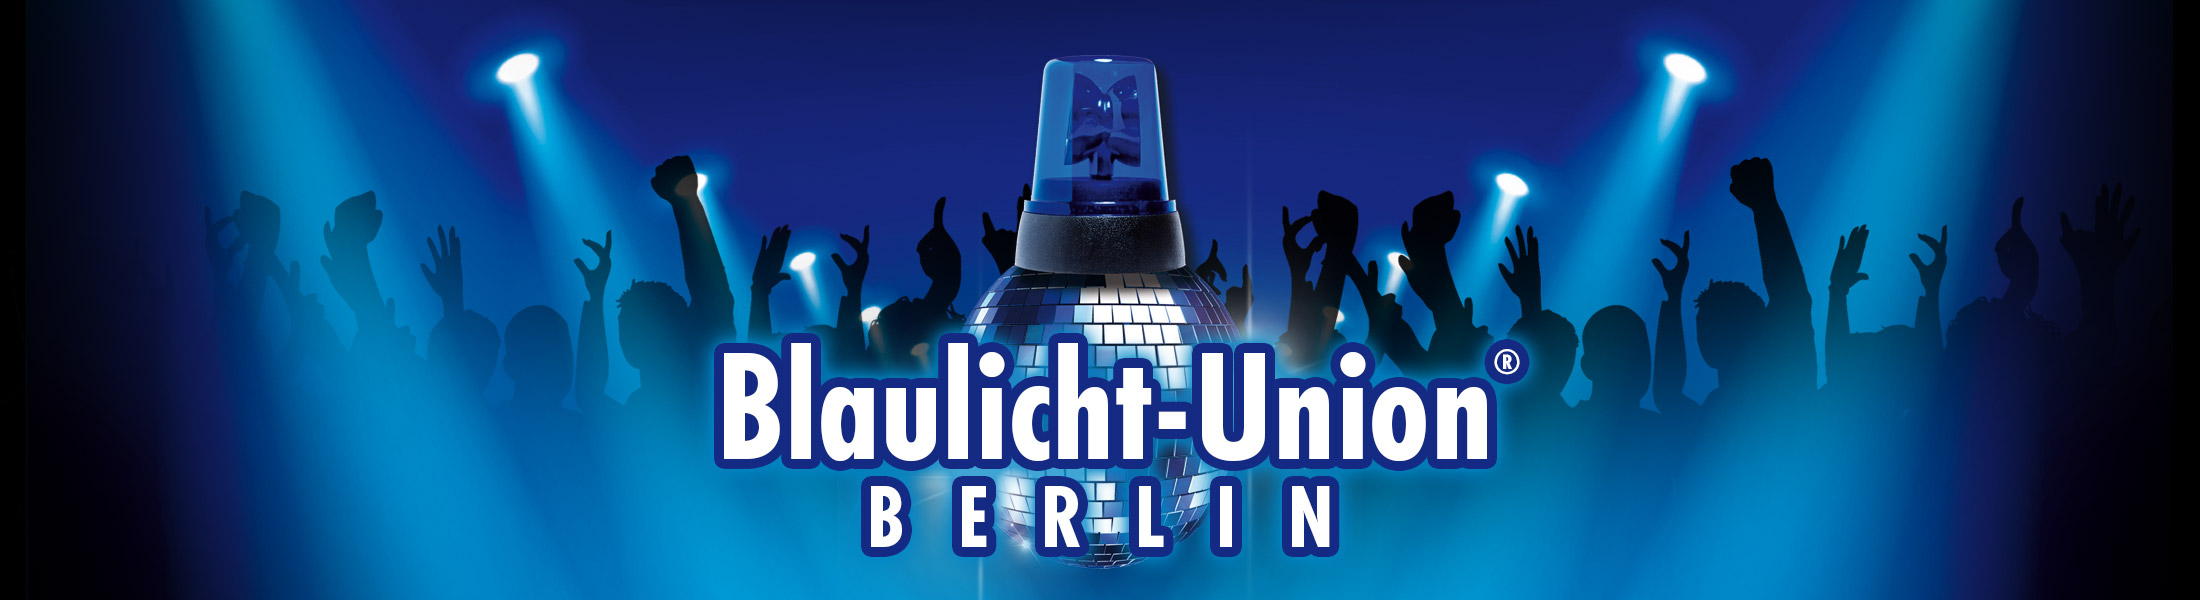 Blaulicht Union Party® Berlin